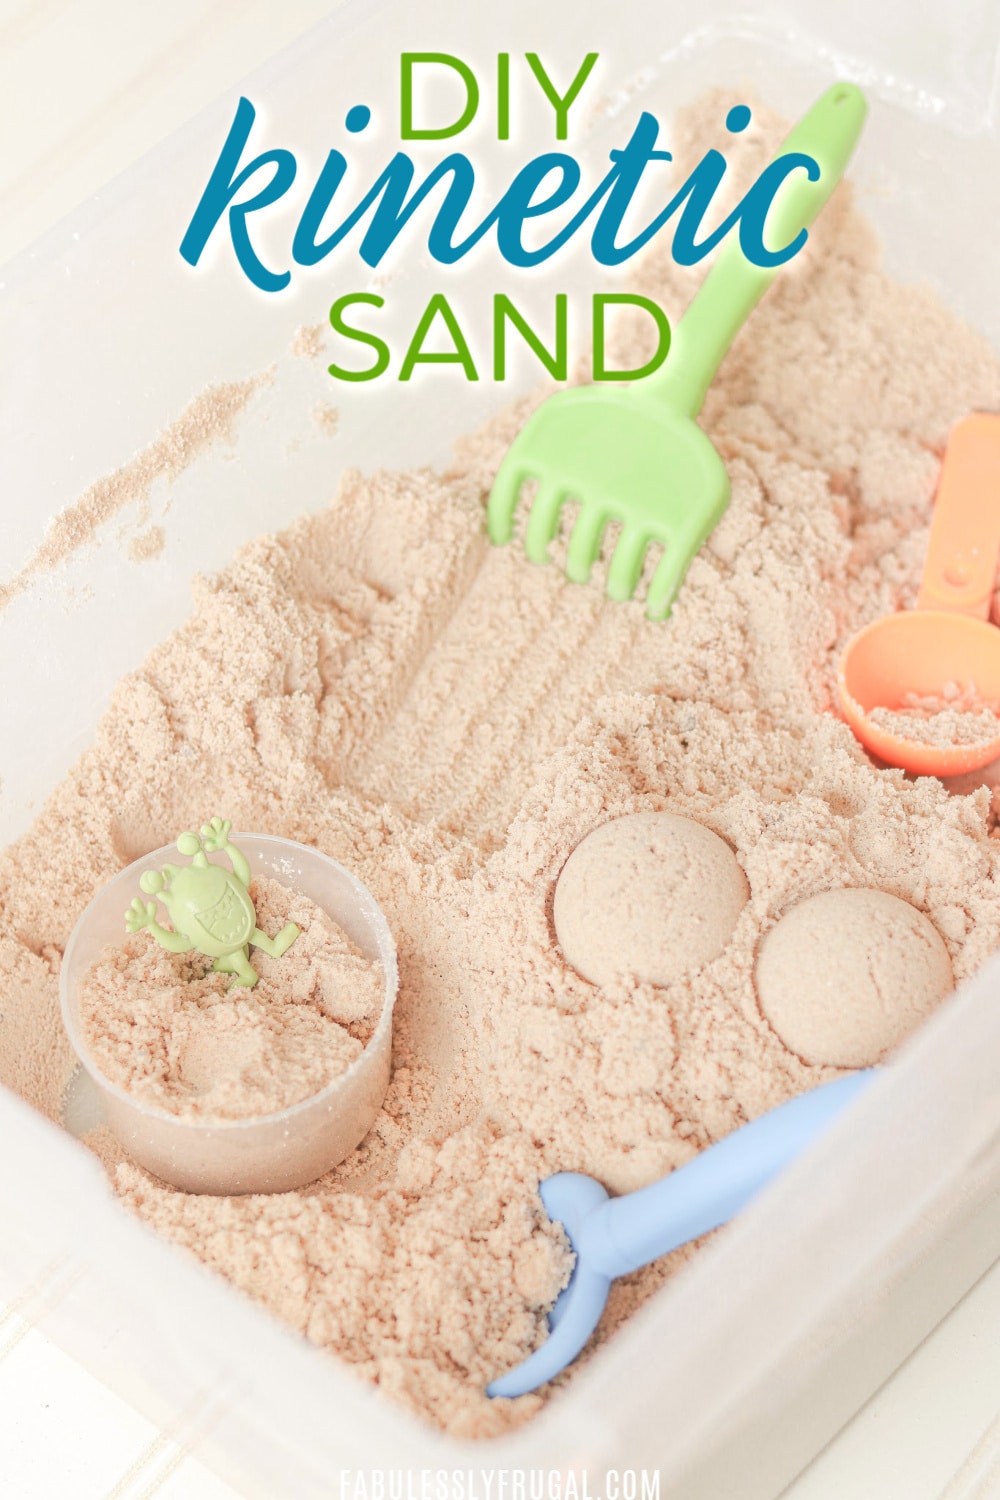 DIY Kinetic sand recipe